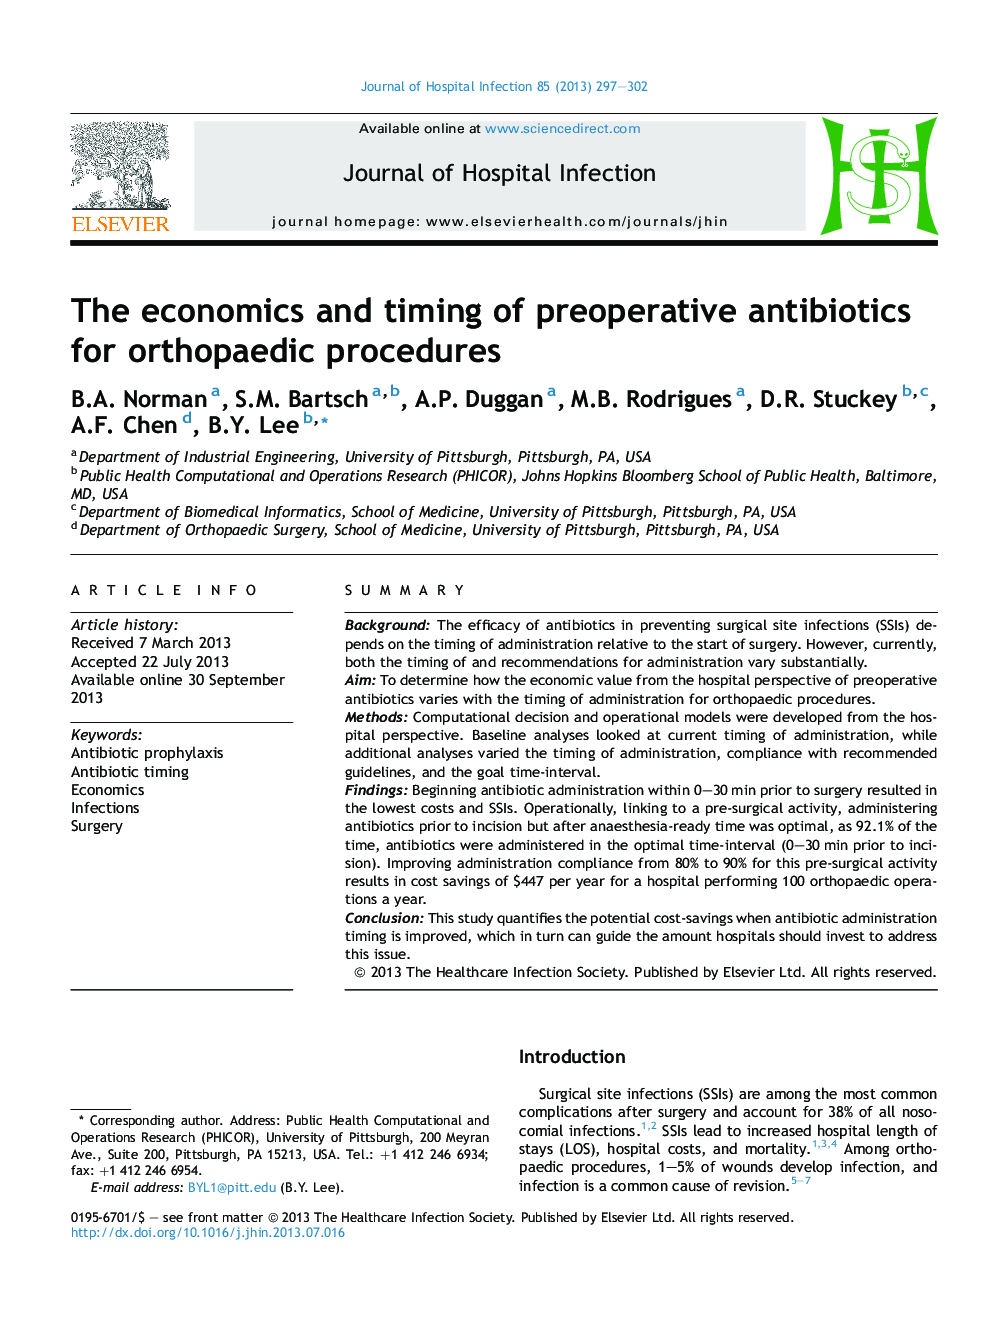 The economics and timing of preoperative antibiotics for orthopaedic procedures